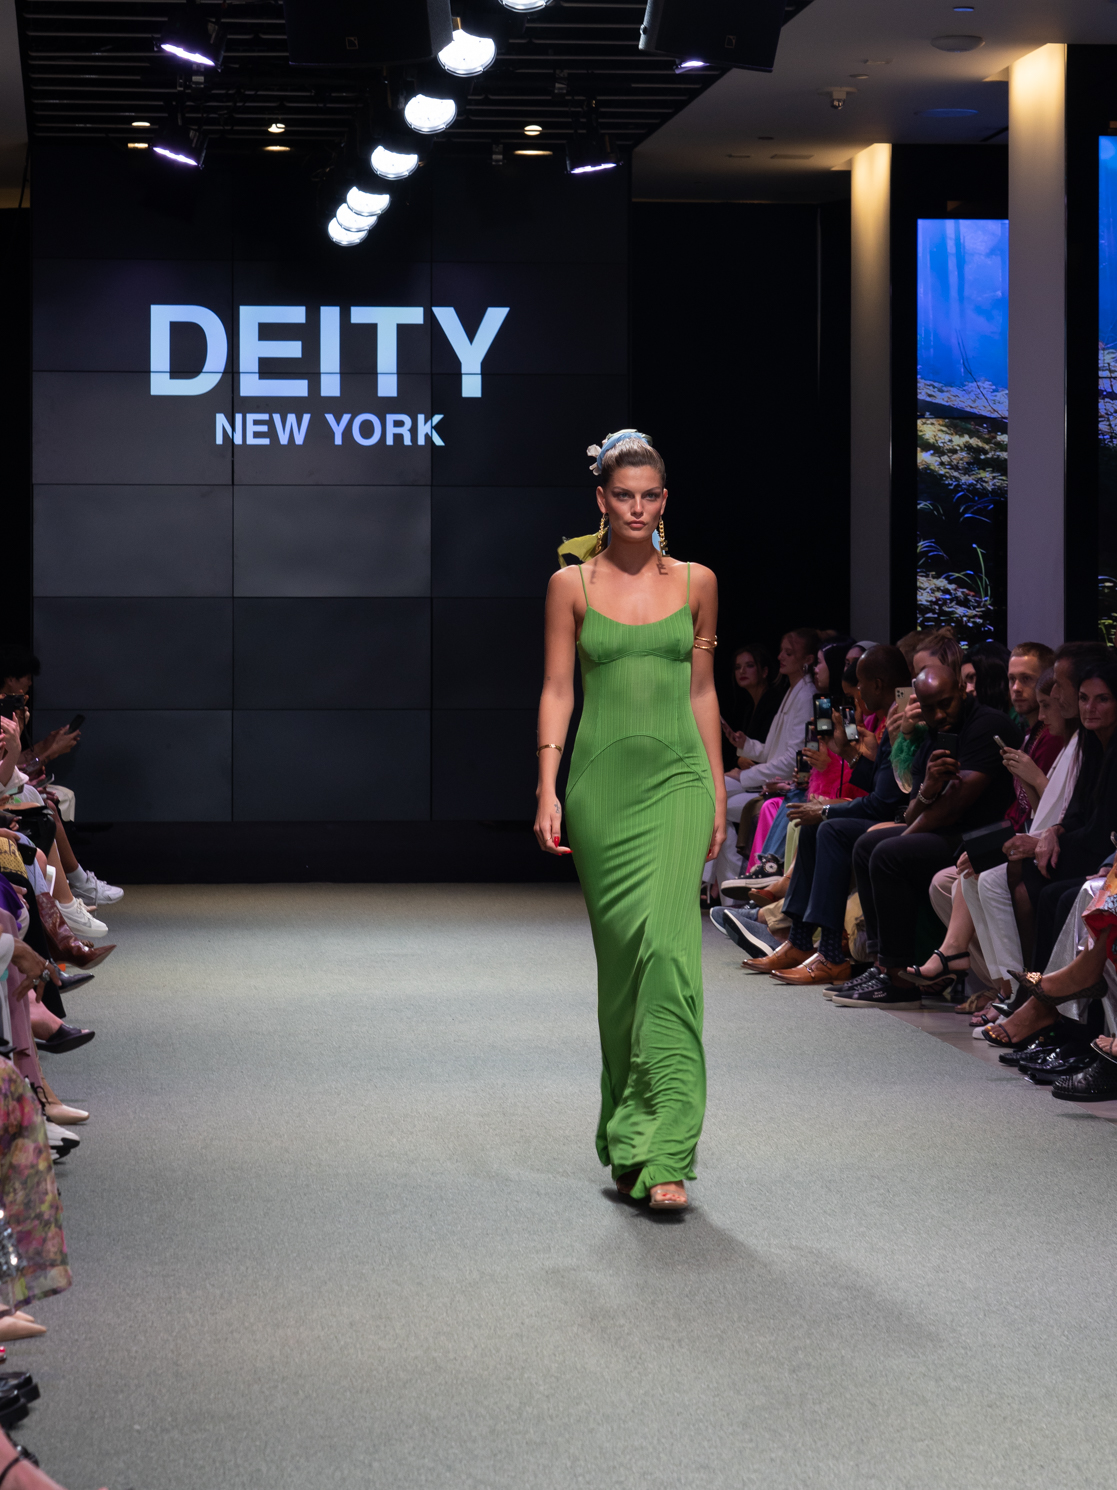 Deity+New+York+showcases+the+Manhattan+woman